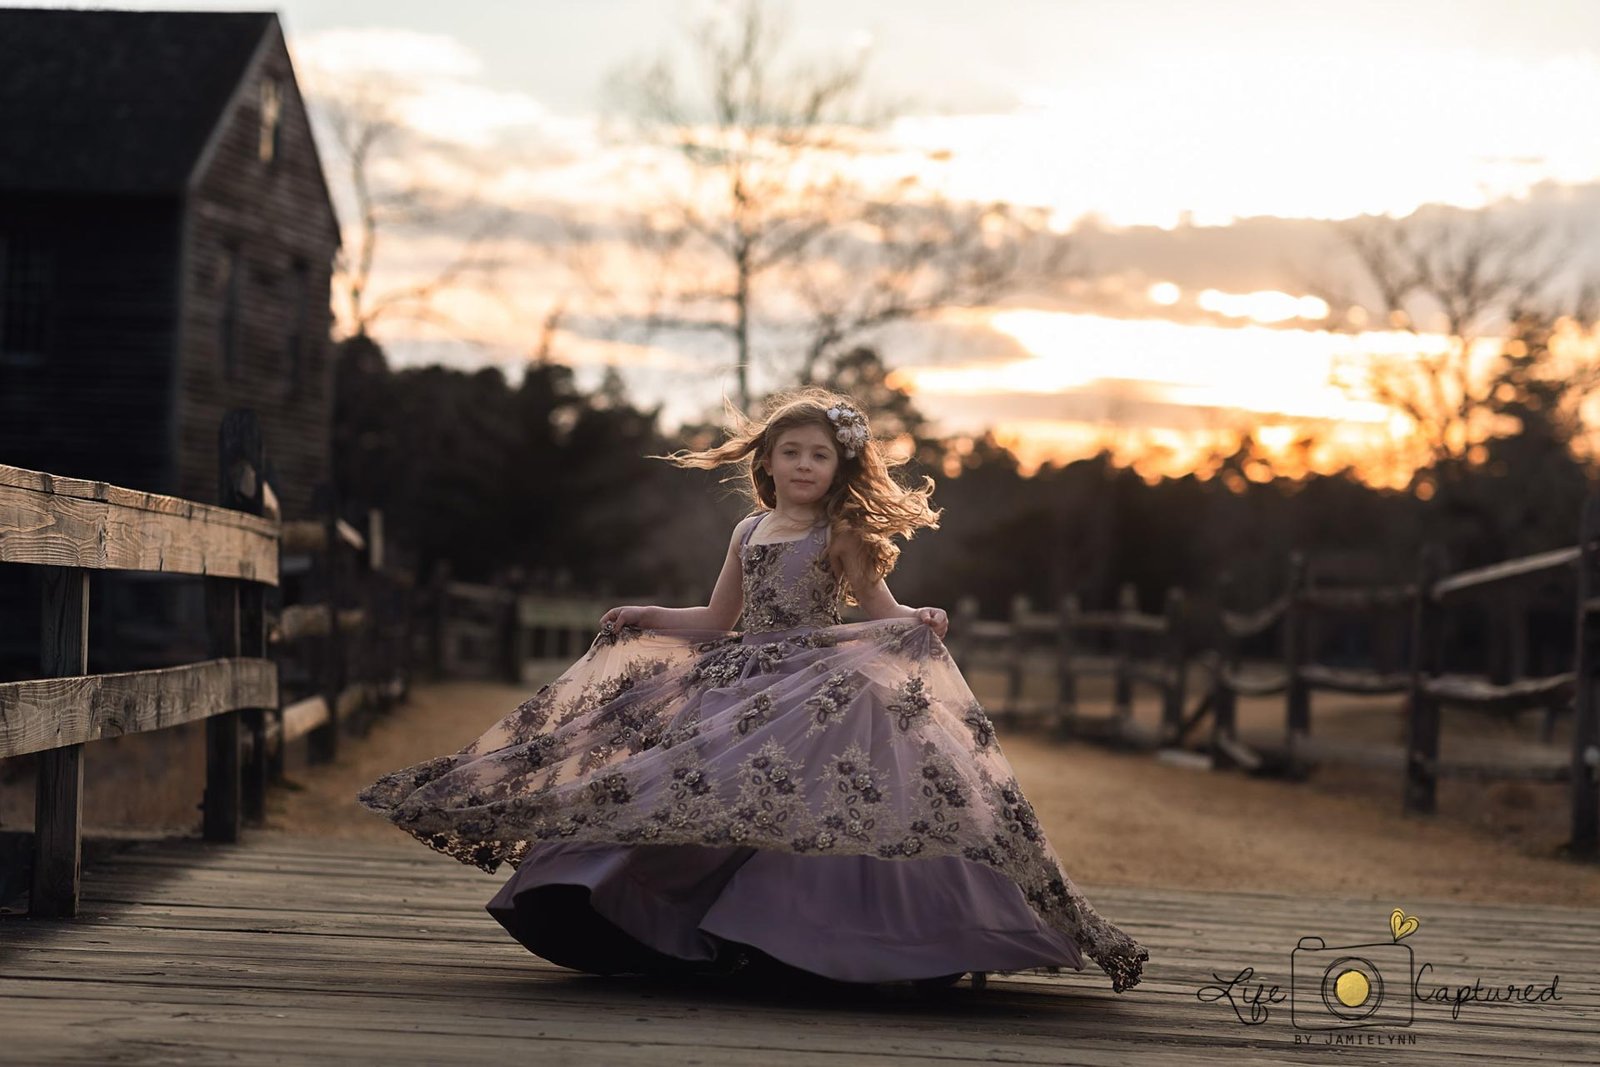 young girl twirling in elegant formal gown in Medford, NJ